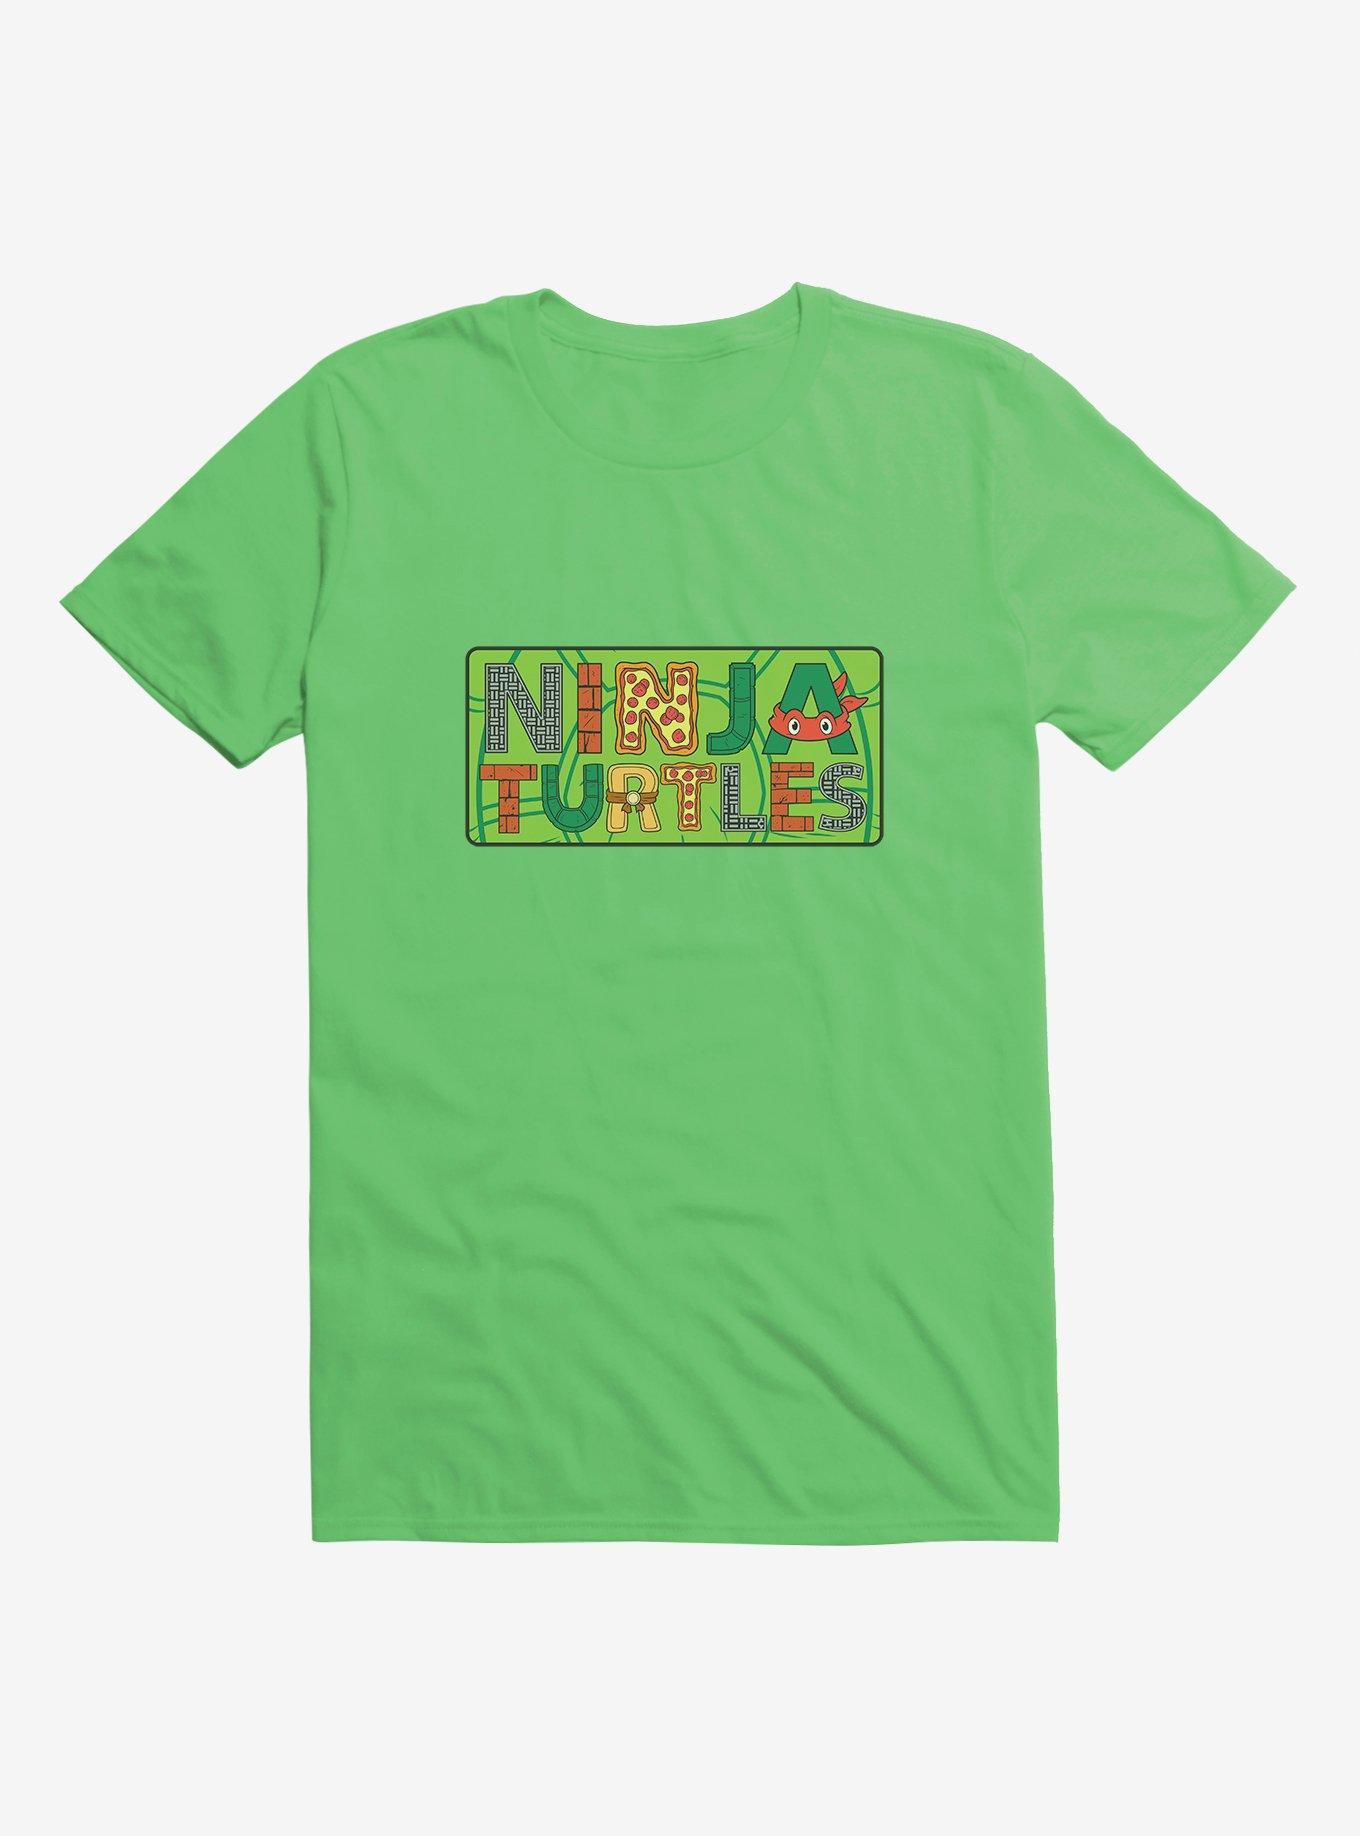 Teenage Mutant Ninja Turtles Title Patterned Letters T-Shirt, KELLY GREEN, hi-res